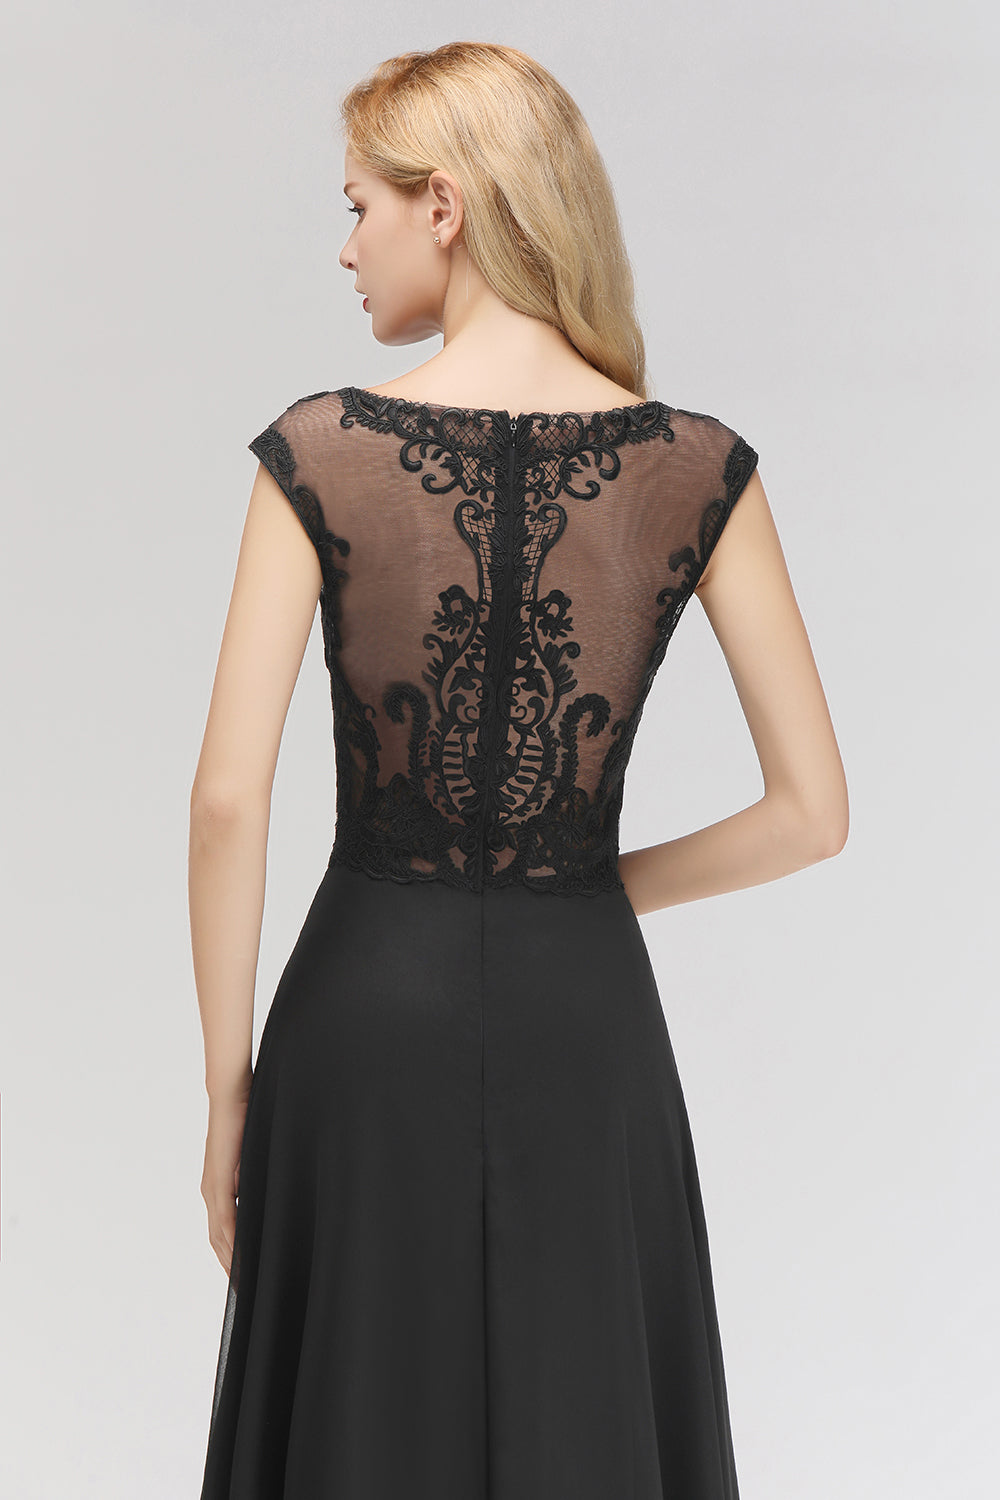 Elegant Chiffon Long Lace Black Bridesmaid Dresses Online